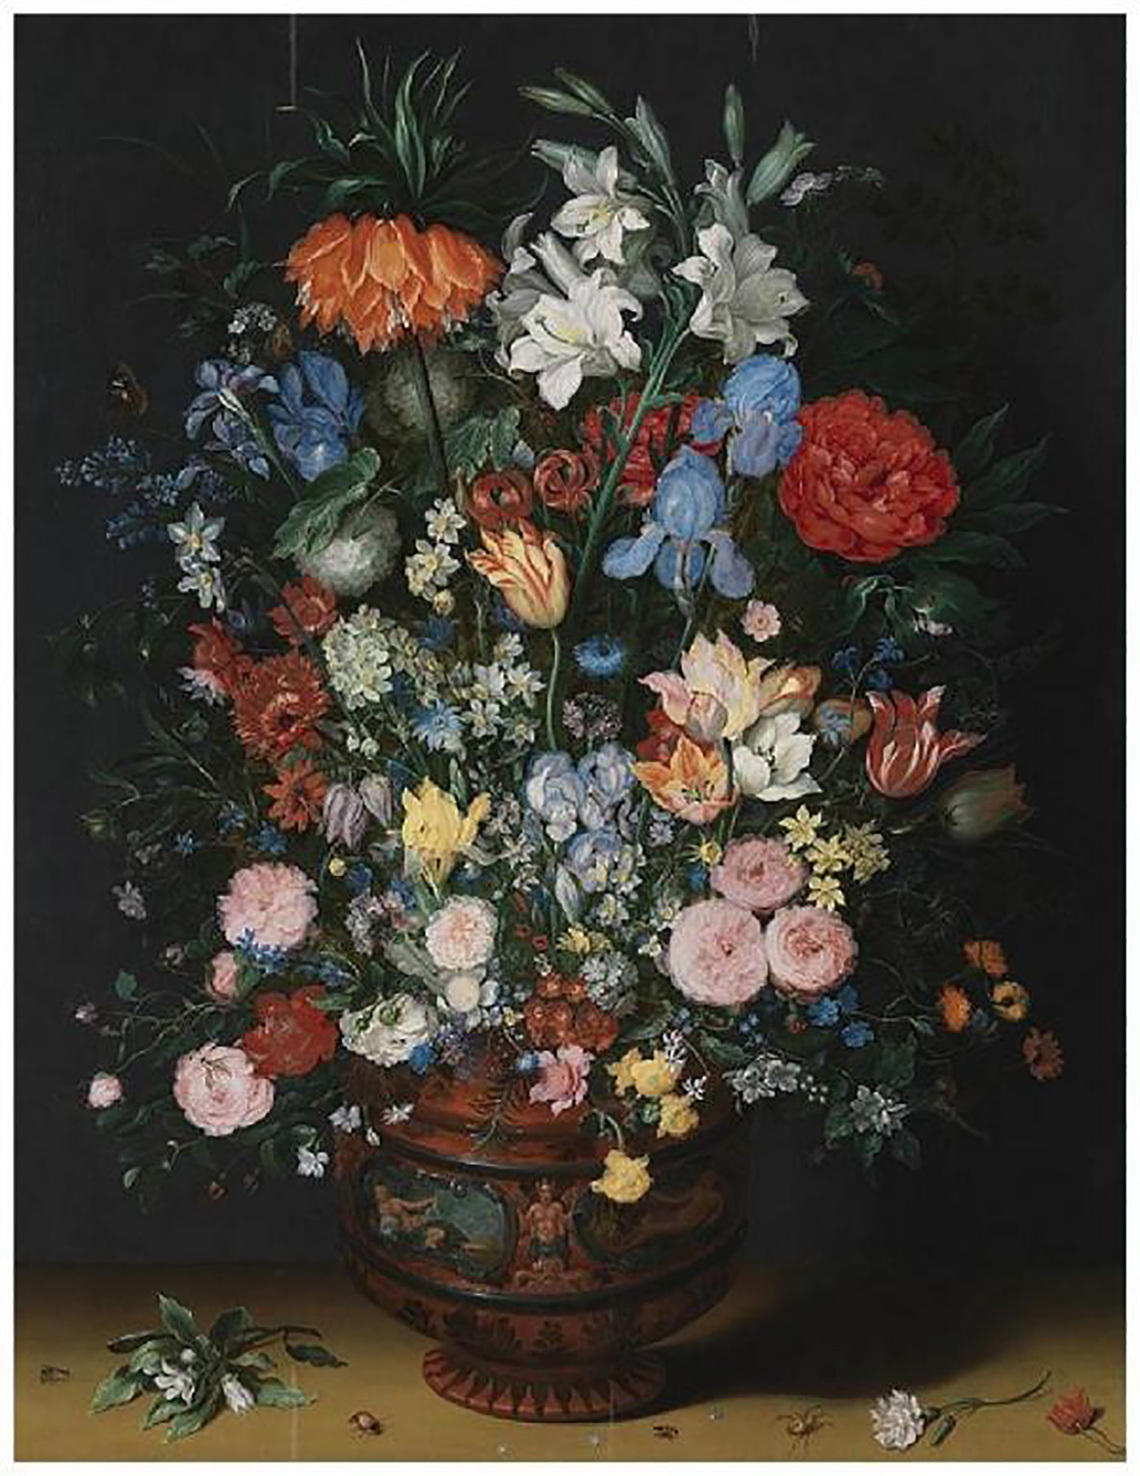 Flowers in a Decorated Ceramic Vase (Antwerp)